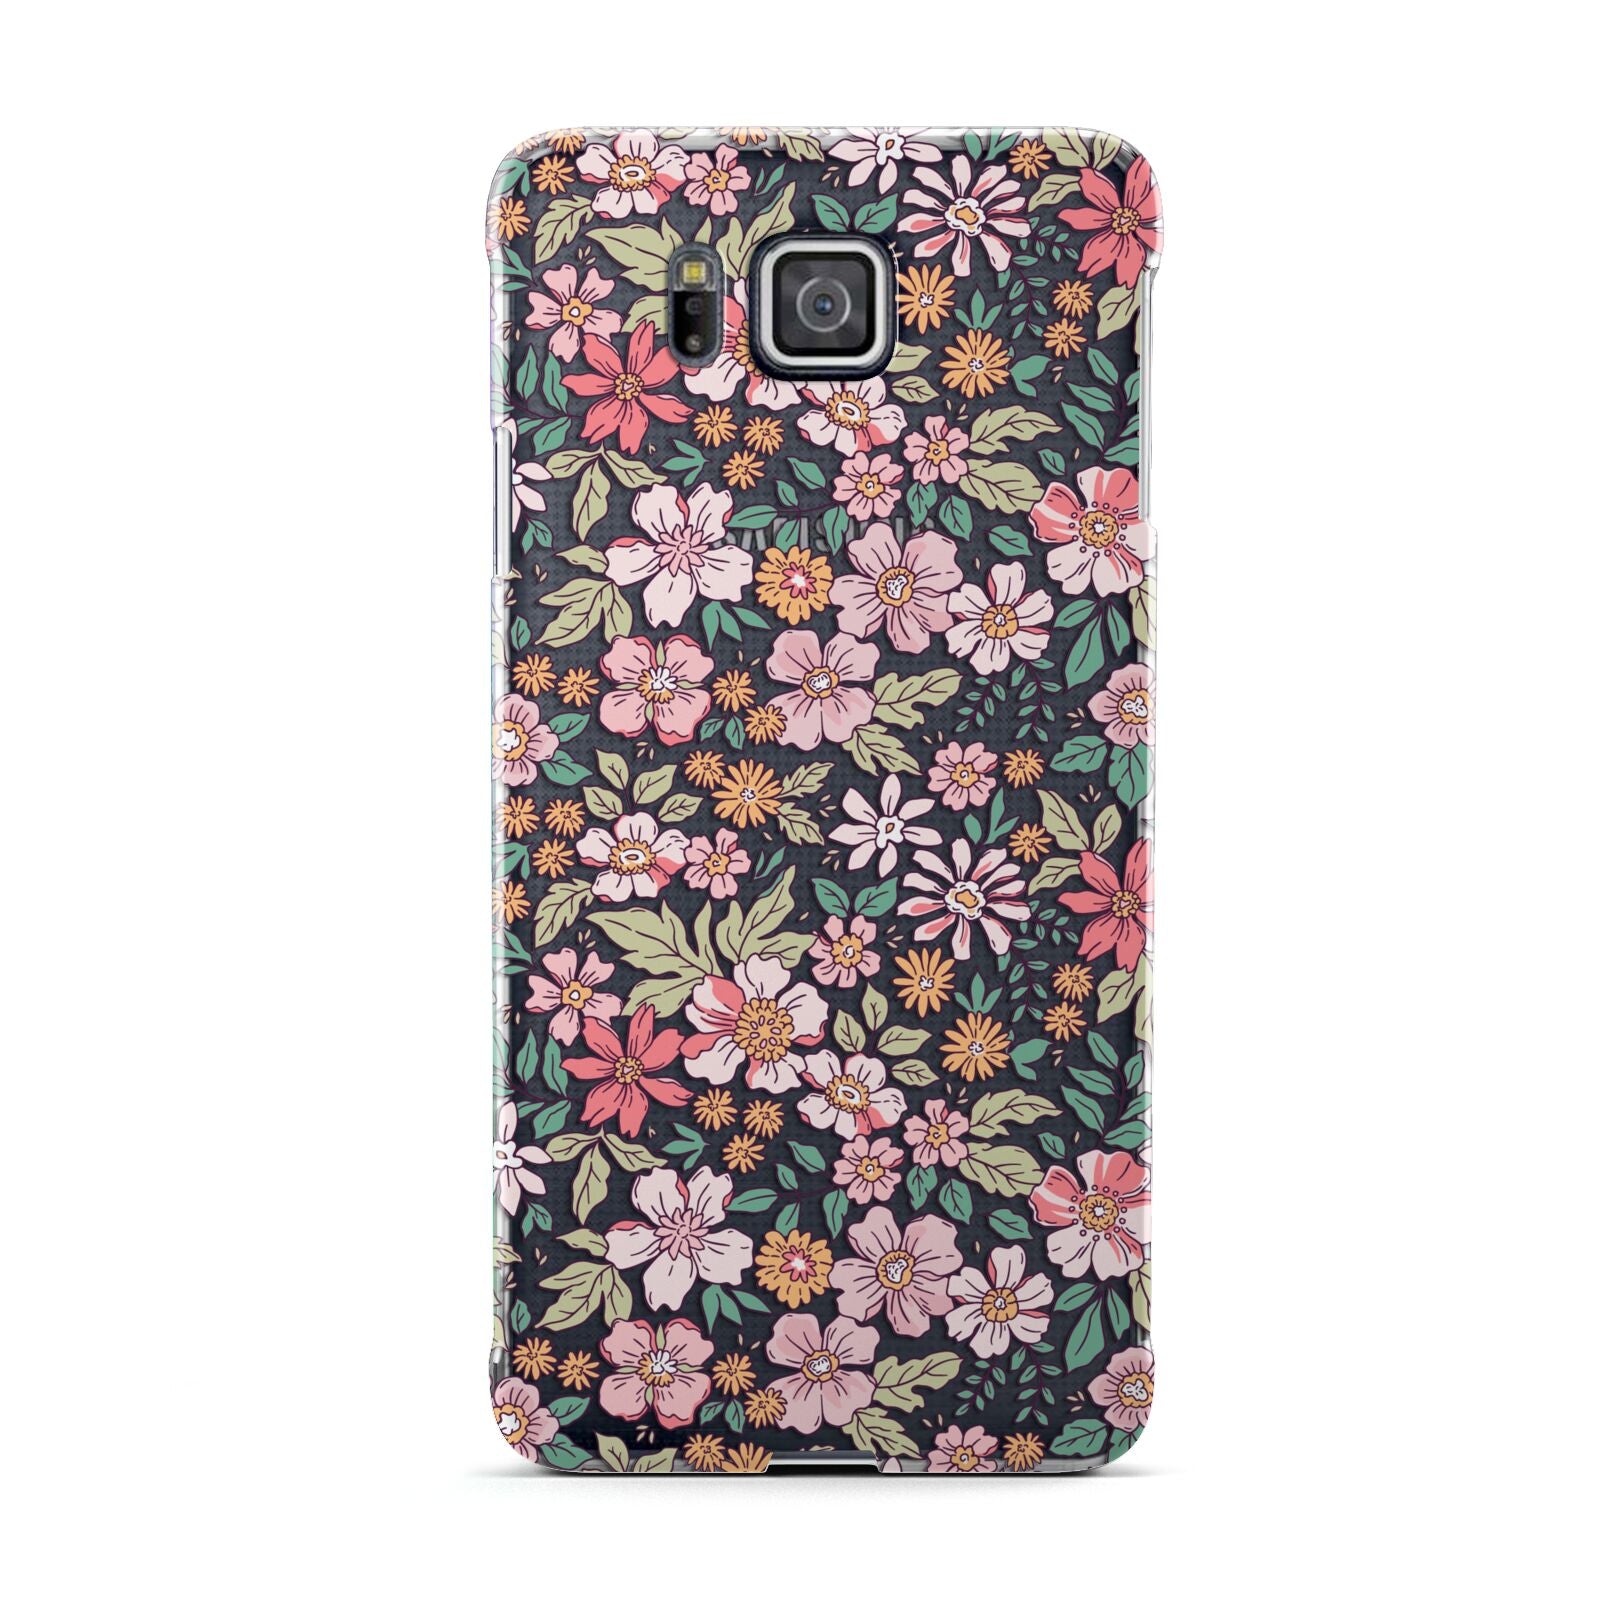 Small Floral Pattern Samsung Galaxy Alpha Case